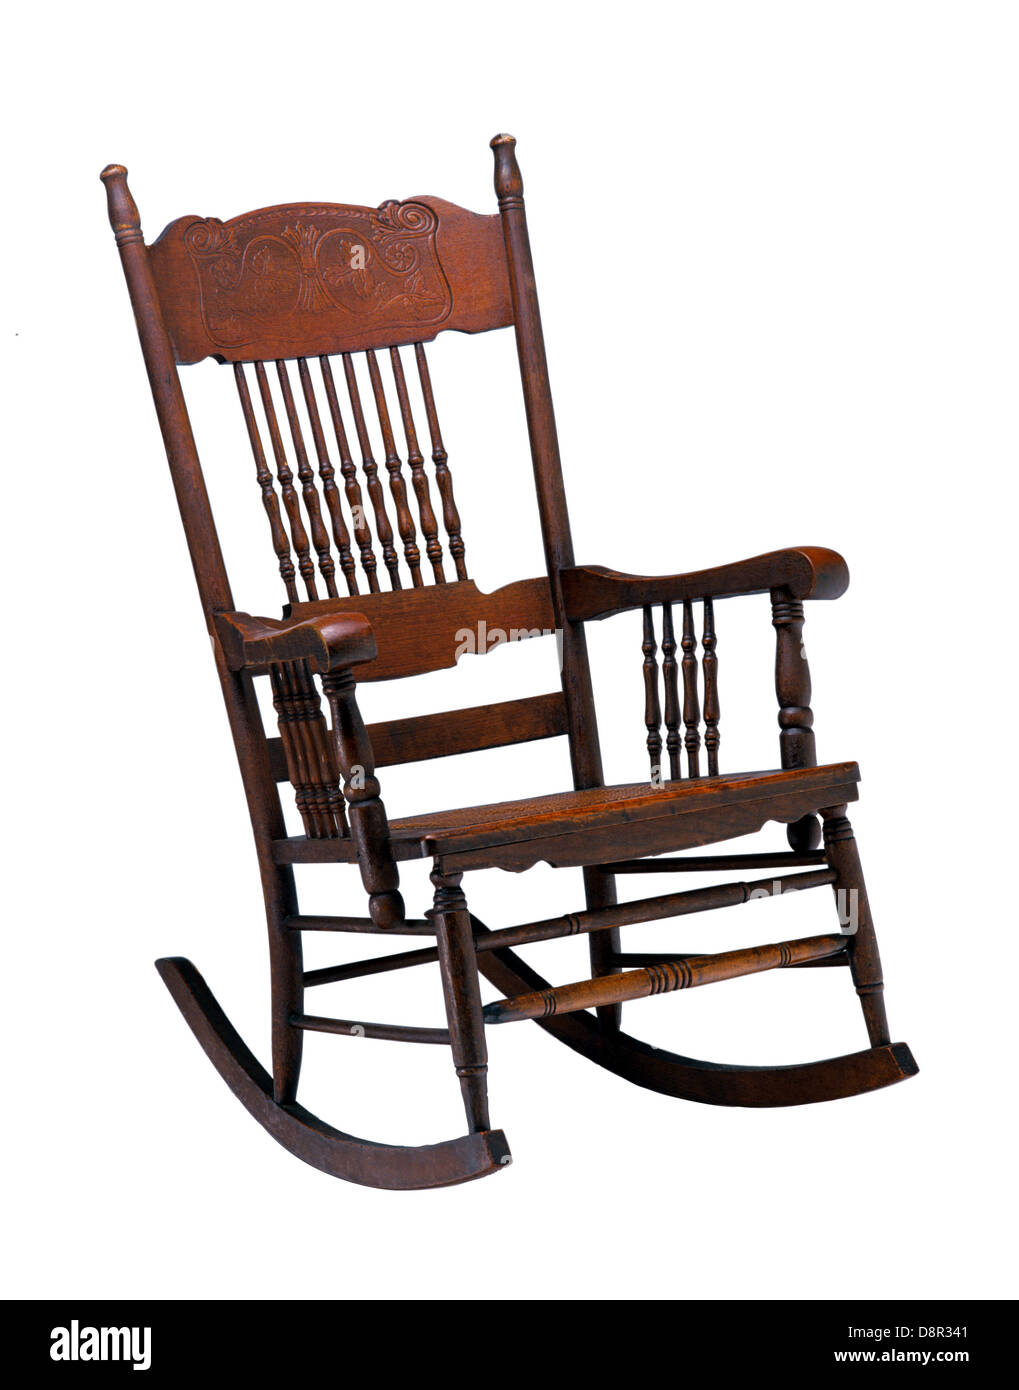 Rocking chair Stock Photo